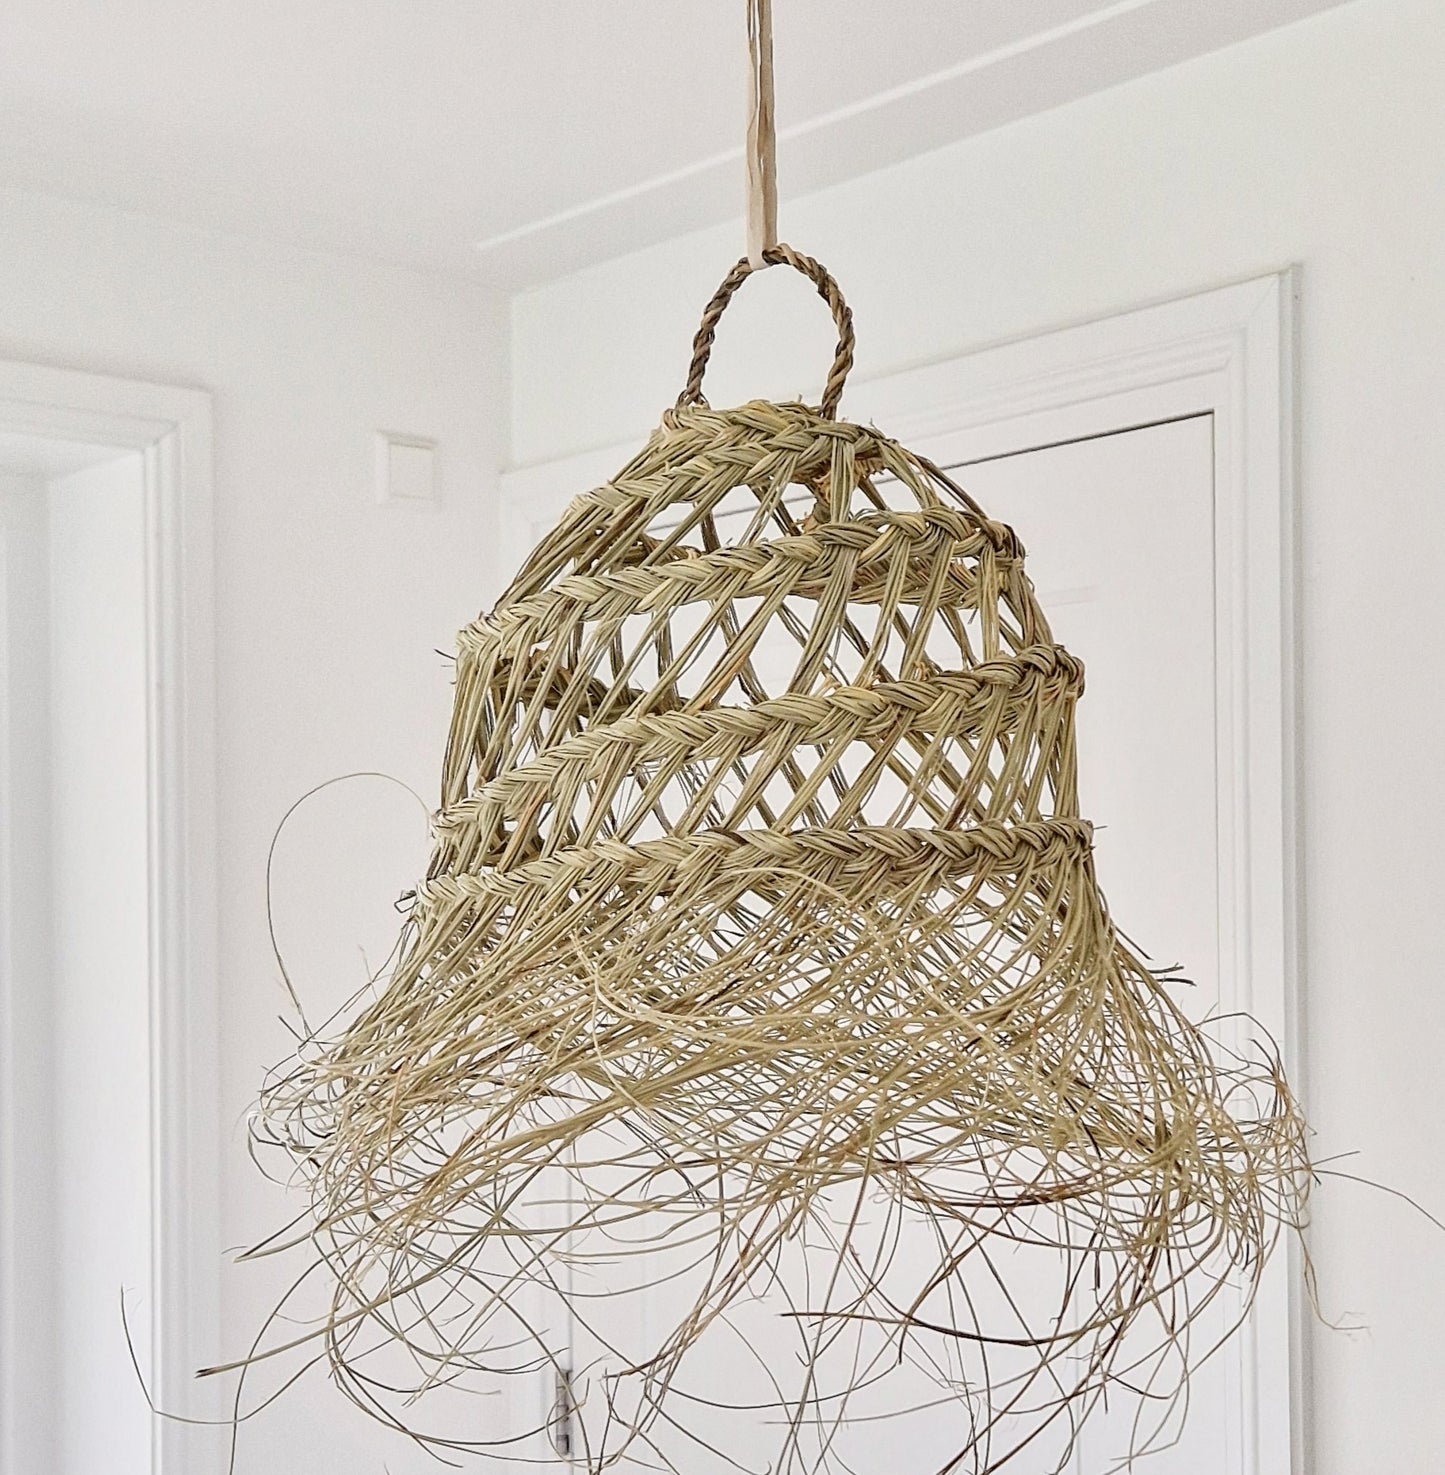 Seagrass hanging lamp